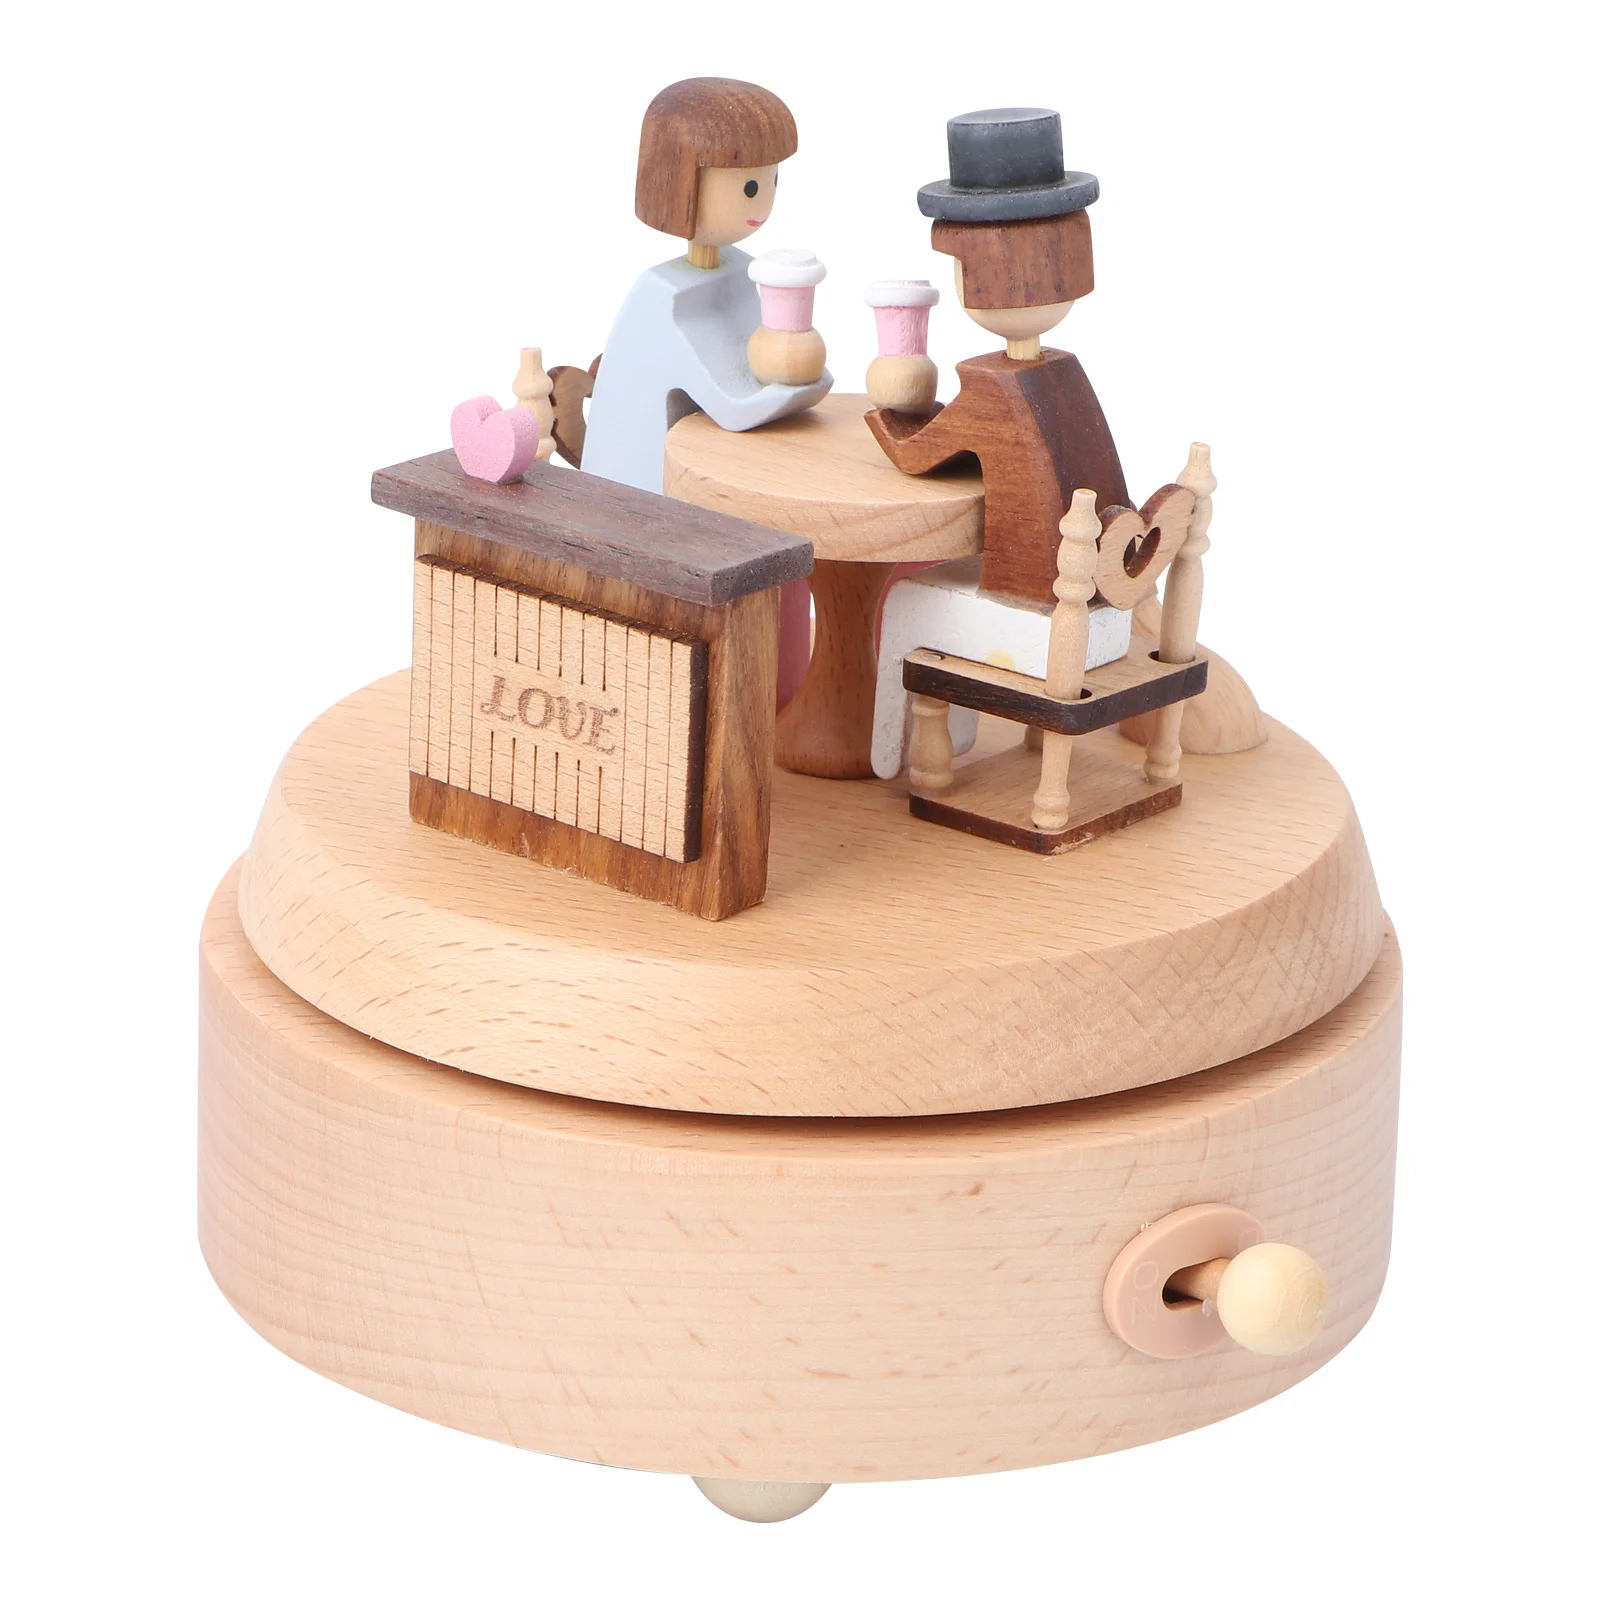 

Wooden Box Love Couple Clockworek Musical Box Love Story Wind Mechanism Desktop Ornament For Valentine Day Wedding Girlfriend